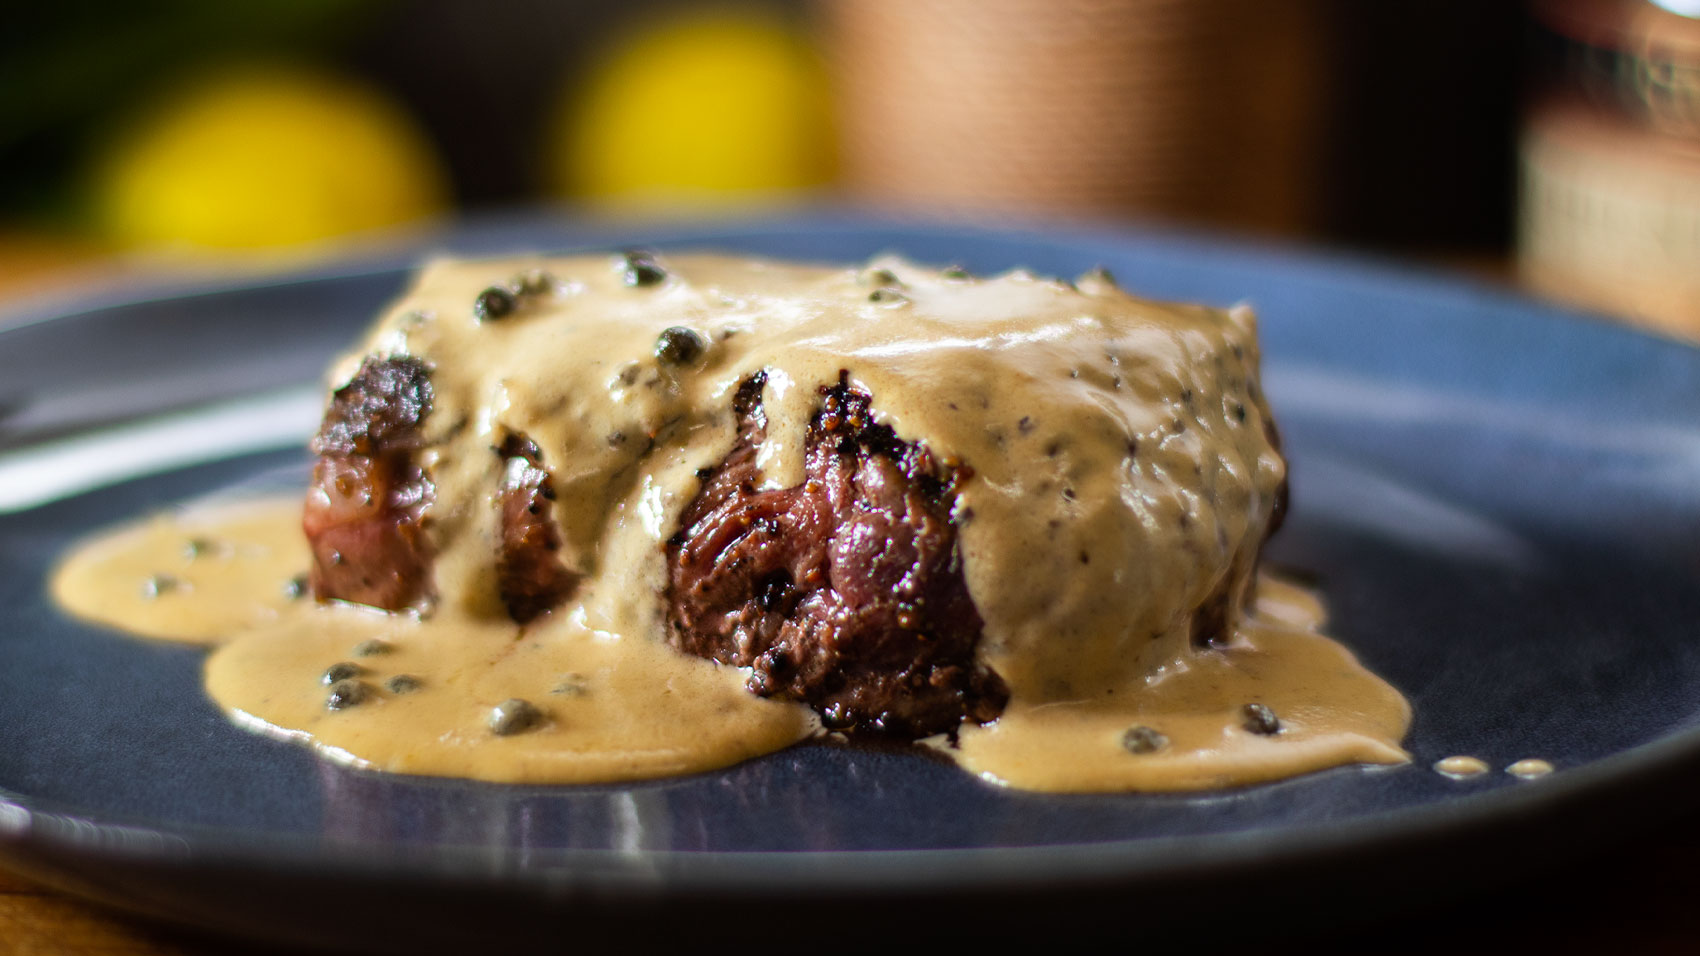 https://recipe30.com/wp-content/uploads/2021/08/Steak-au-poivre-pepper-steak.jpg